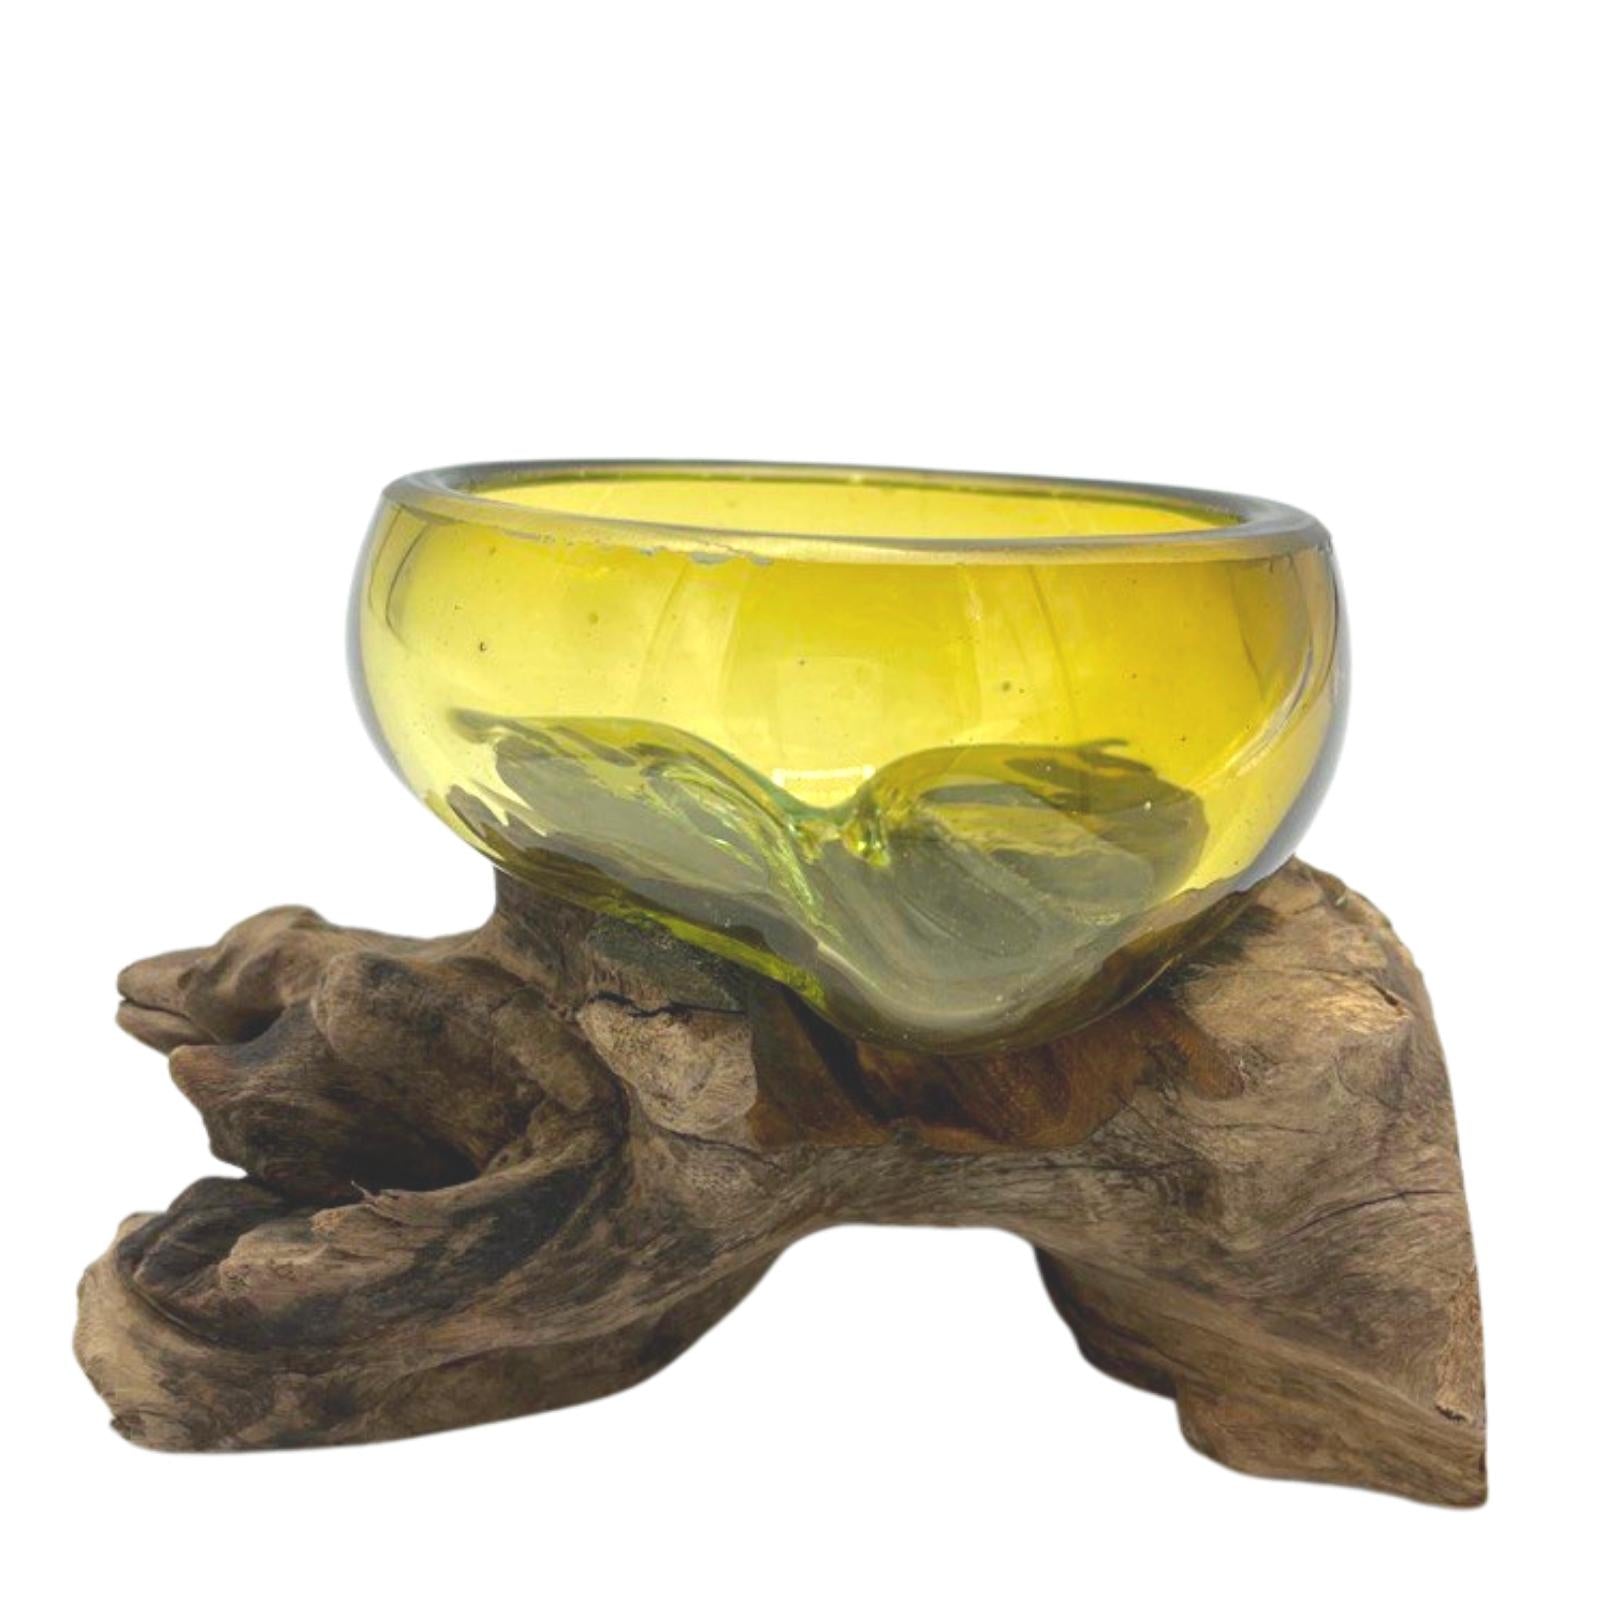 View Molton Glass Mini Amber Bowl on Wood information